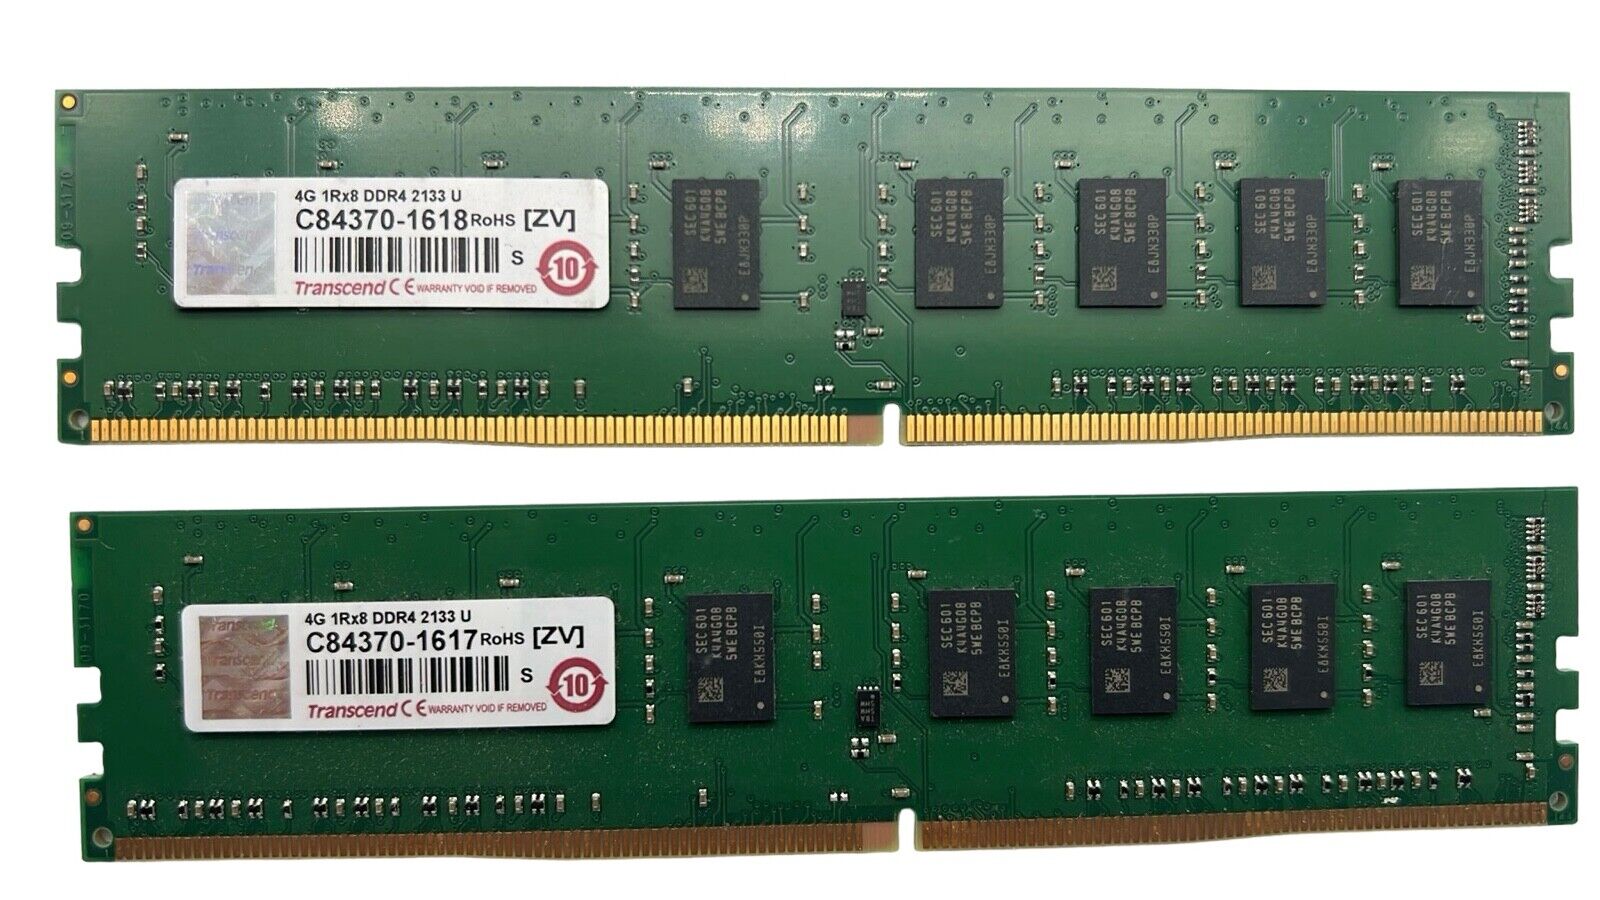 Transcend 8GB (2x4GB) RAM PC4-17000 DDR4-2133P SDRAM C84370-1618